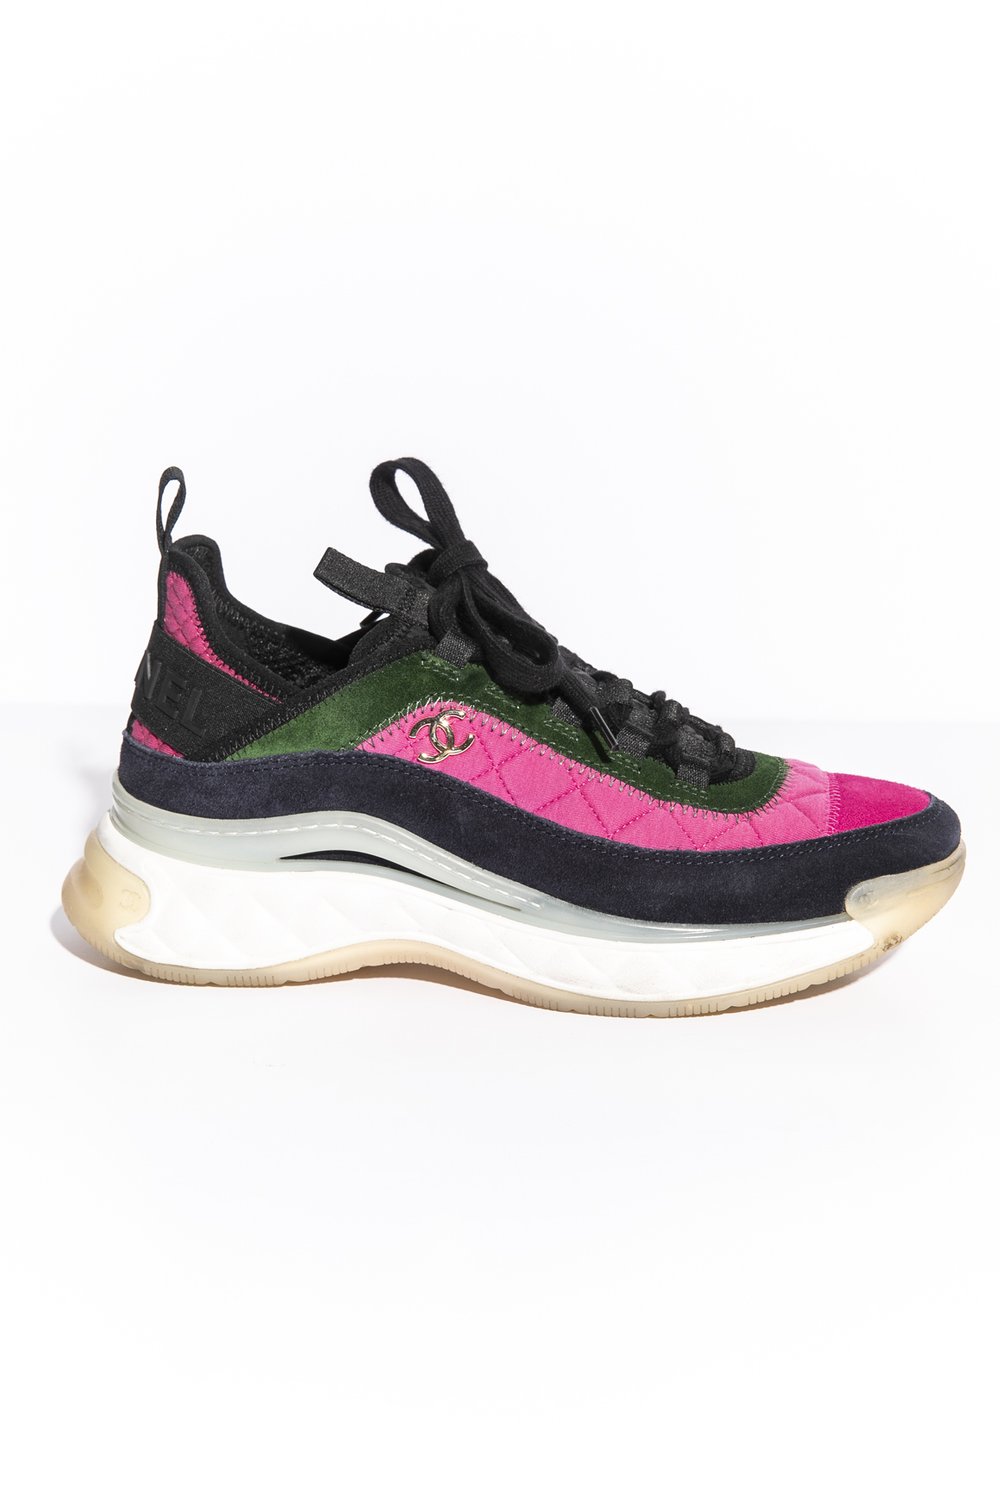 CHANEL Pink & Green Platform Sneakers (Sz. 38) — MOSS Designer Consignment